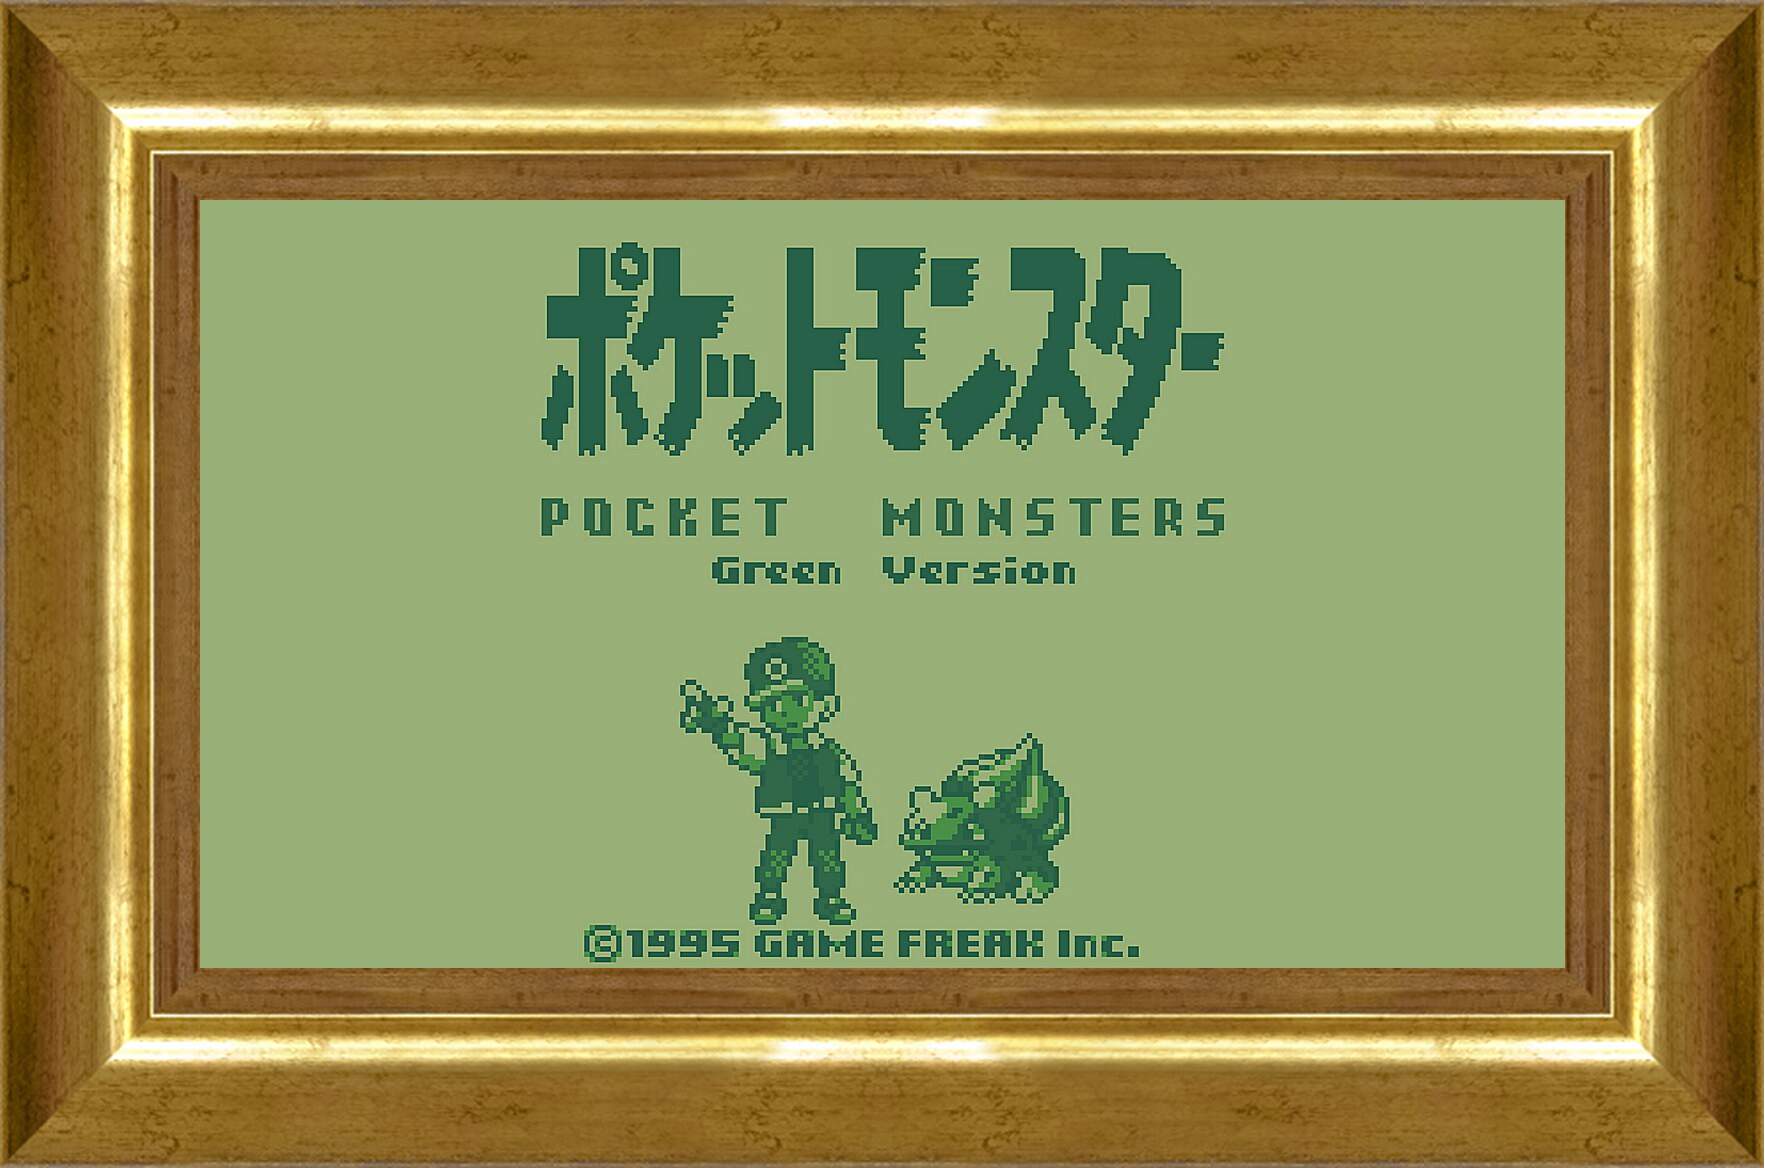 Картина в раме - Pocket Monsters Green Version
